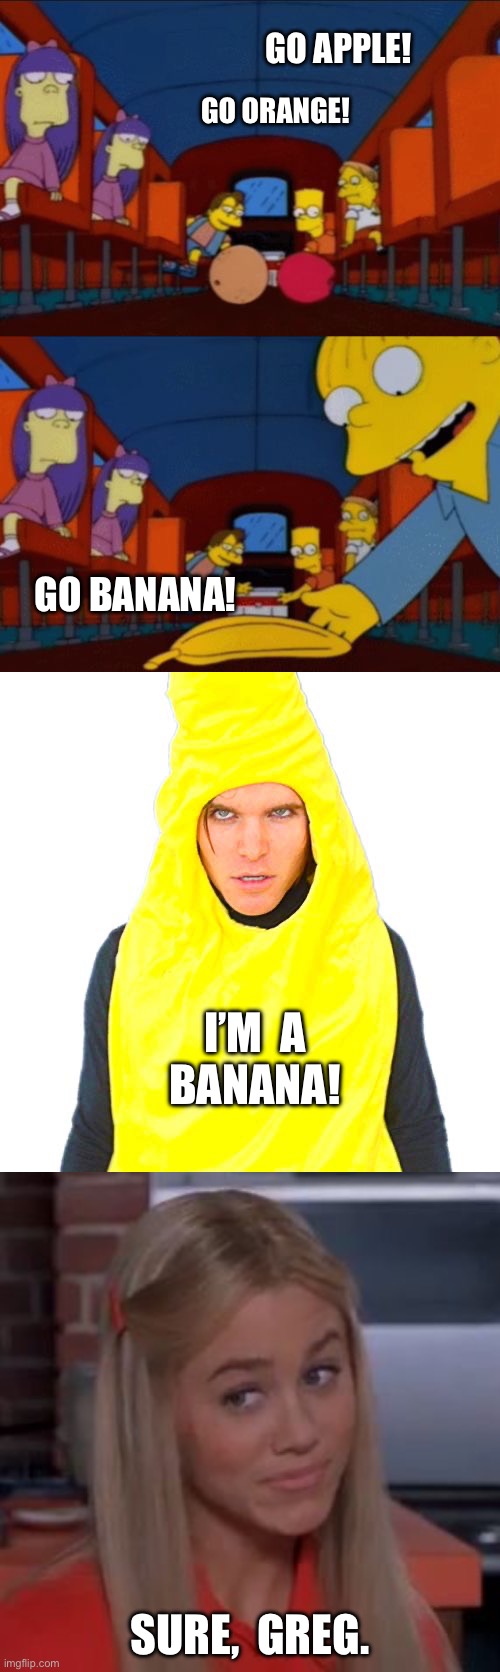 Go Banana? Sure, Greg. | GO APPLE! GO ORANGE! GO BANANA! I’M  A  BANANA! SURE,  GREG. | image tagged in go apple go orange go banana simpsons,onision i'm a banana,sure jan,onision,banana,the simpsons | made w/ Imgflip meme maker